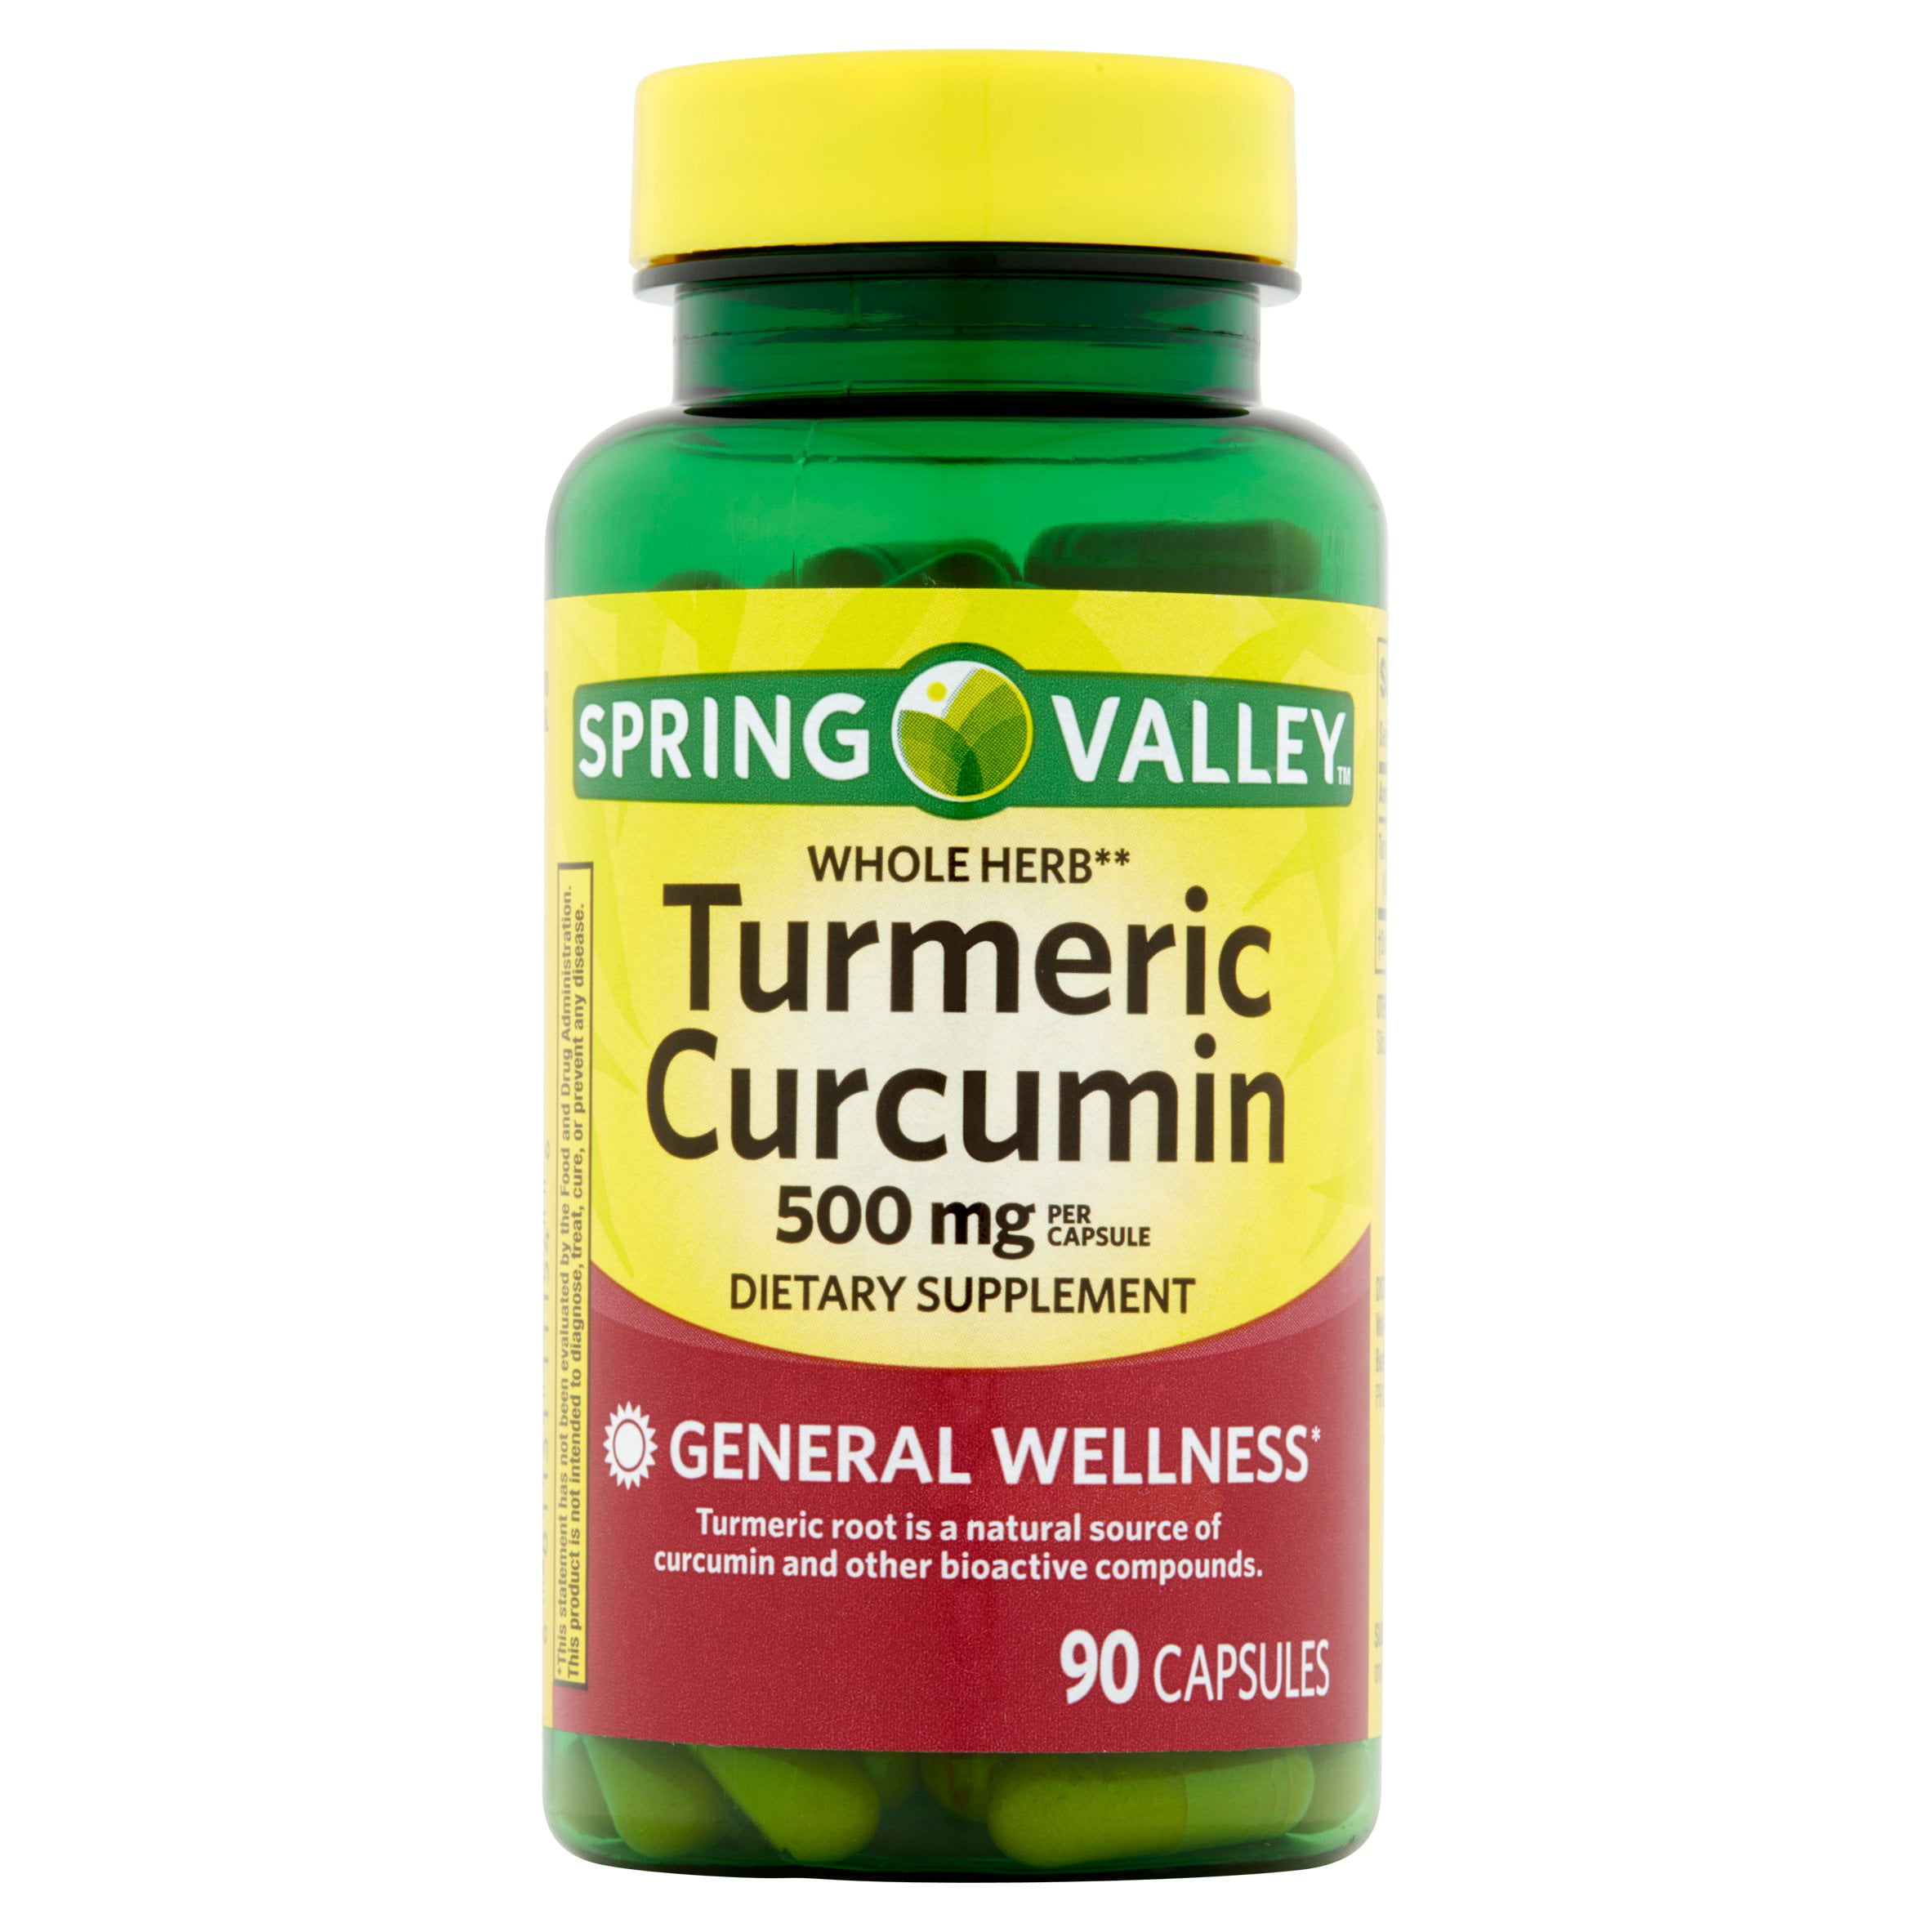 What Is turmeric curcumin?